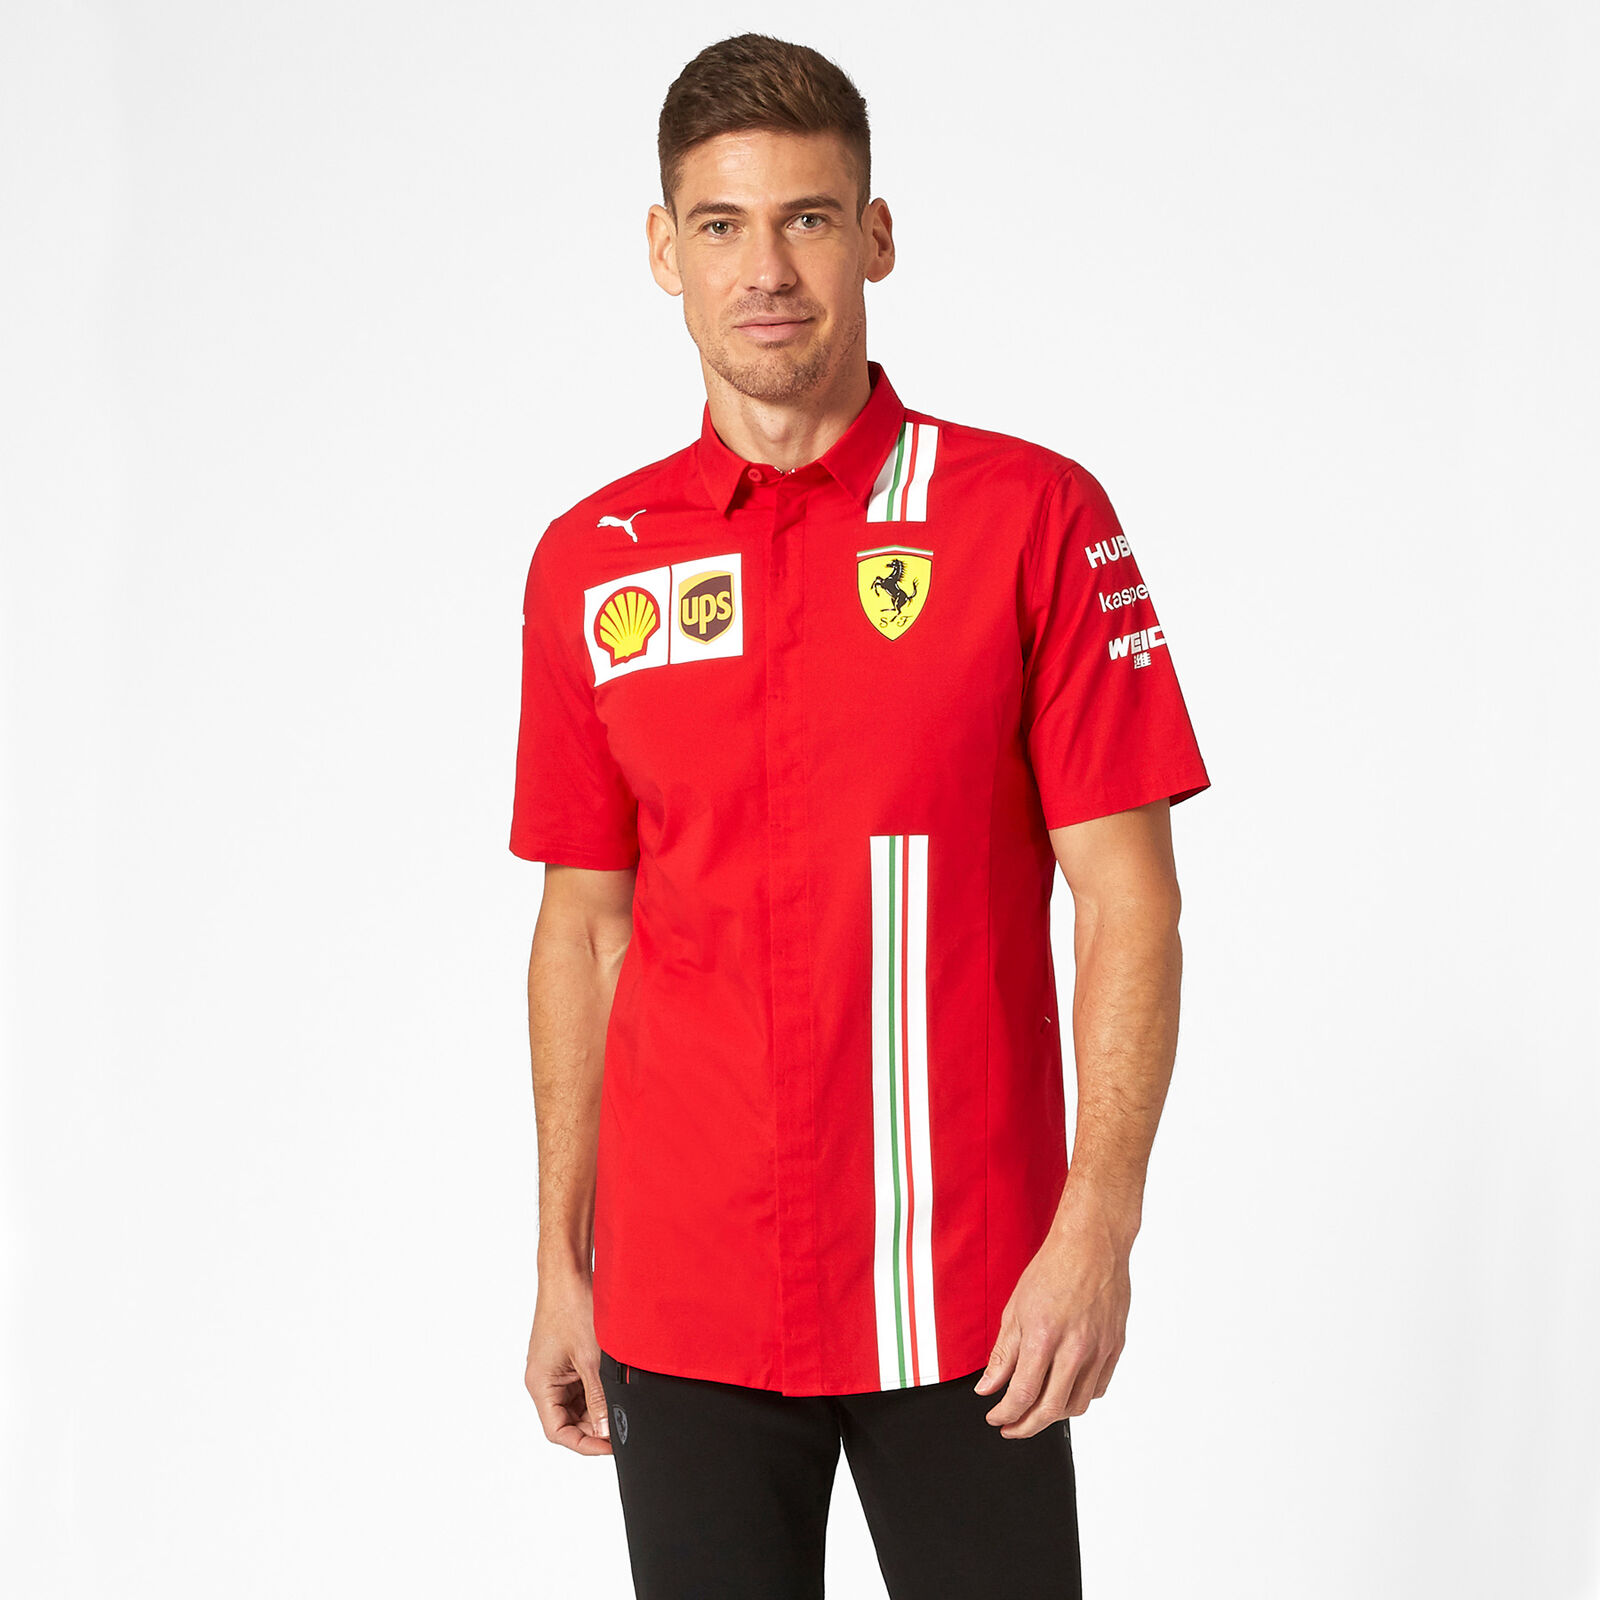 20/21 Team Shirt - Scuderia Ferrari